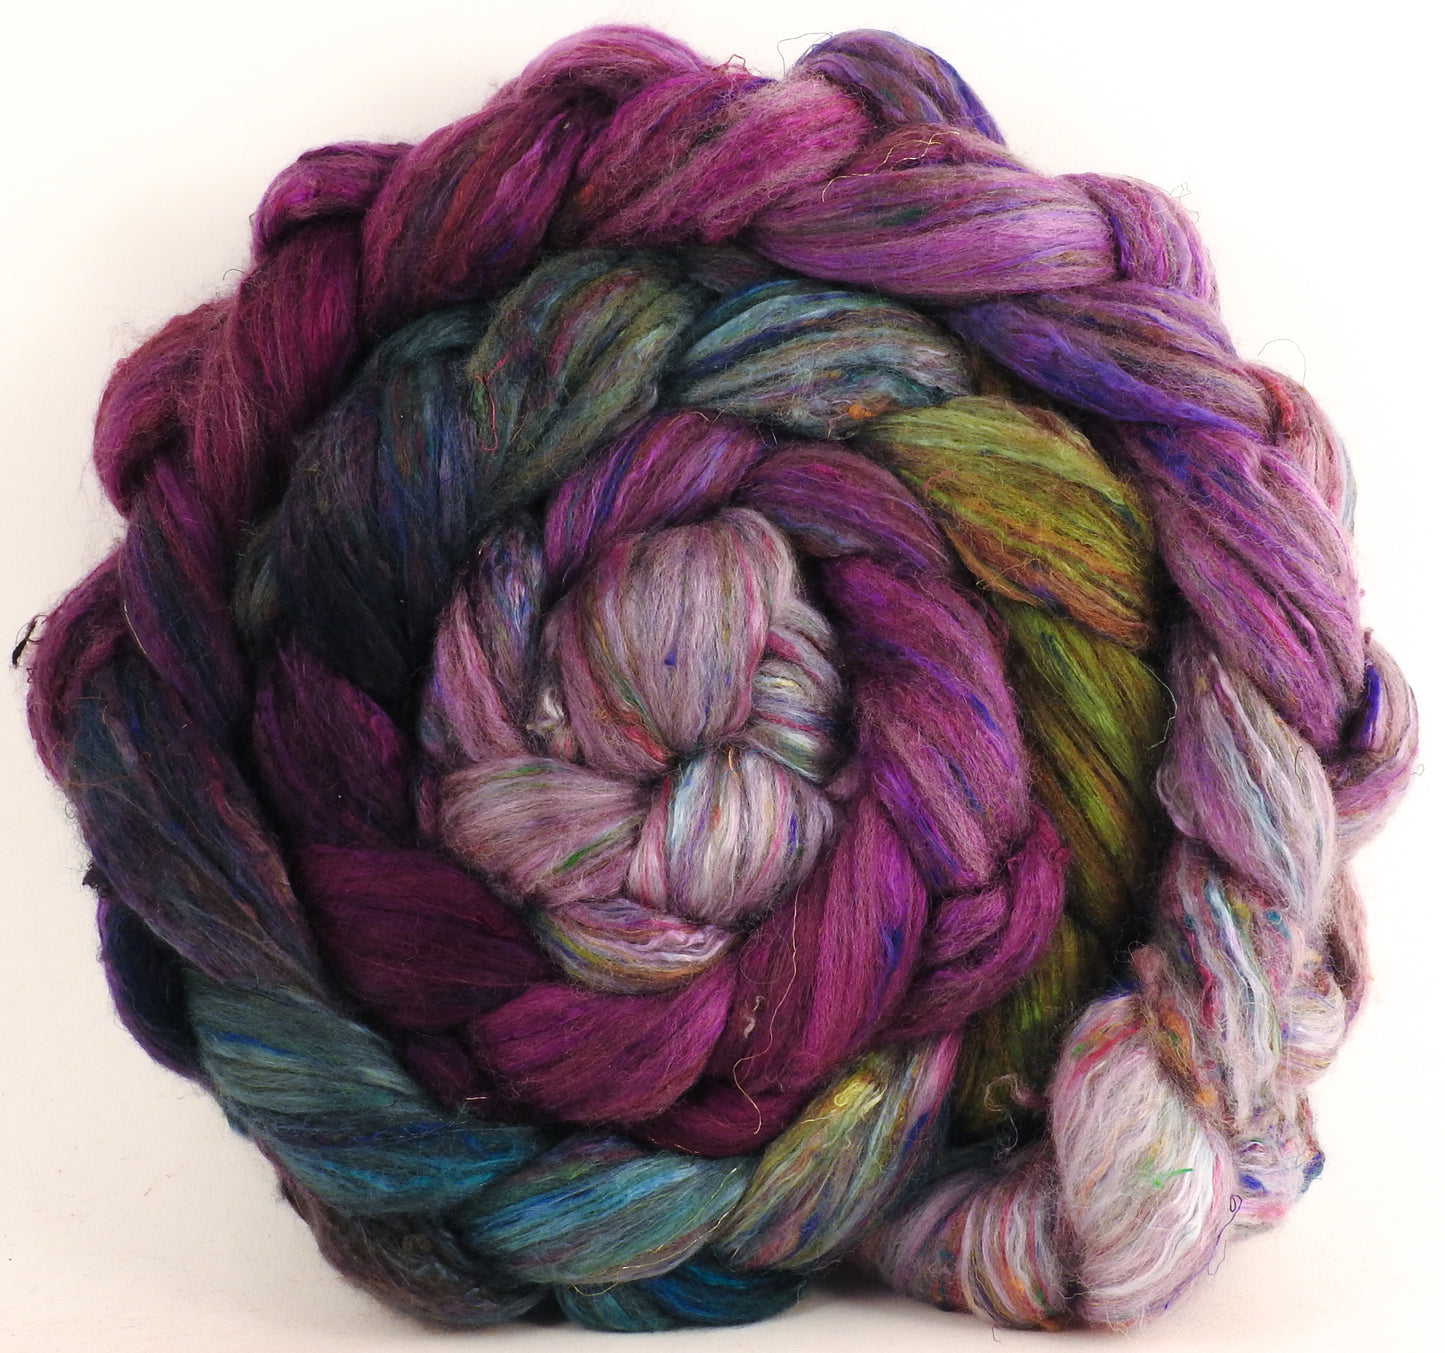 Batt in a Braid #39 - Peach Blossom (6.4 oz) - Falkland Merino/ Mulberry Silk / Sari Silk (50/25/25)